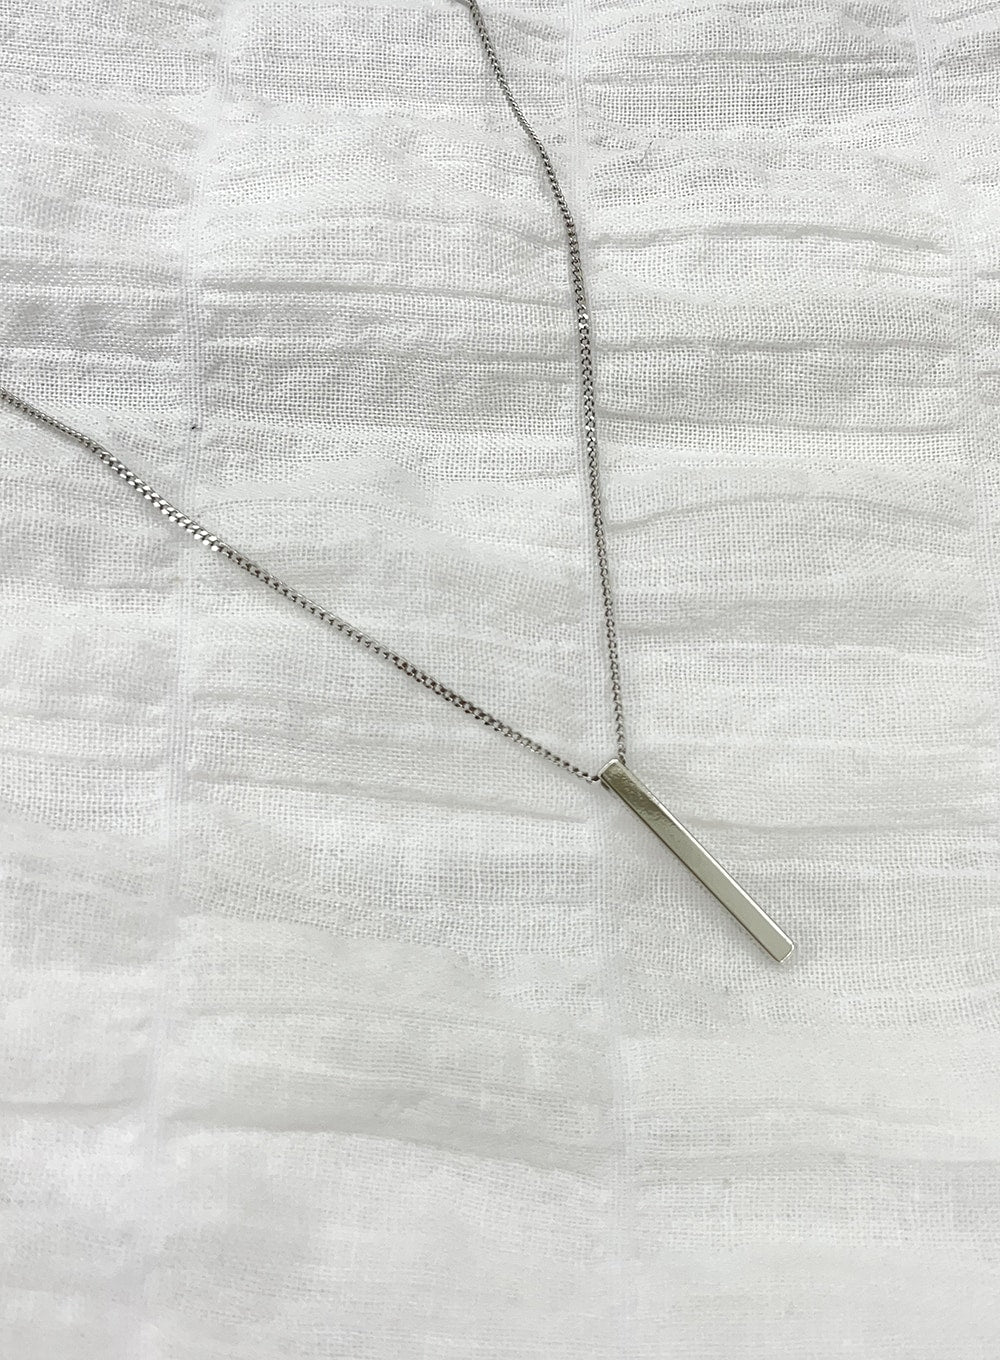 Basic Stick Pendant Necklace OU1